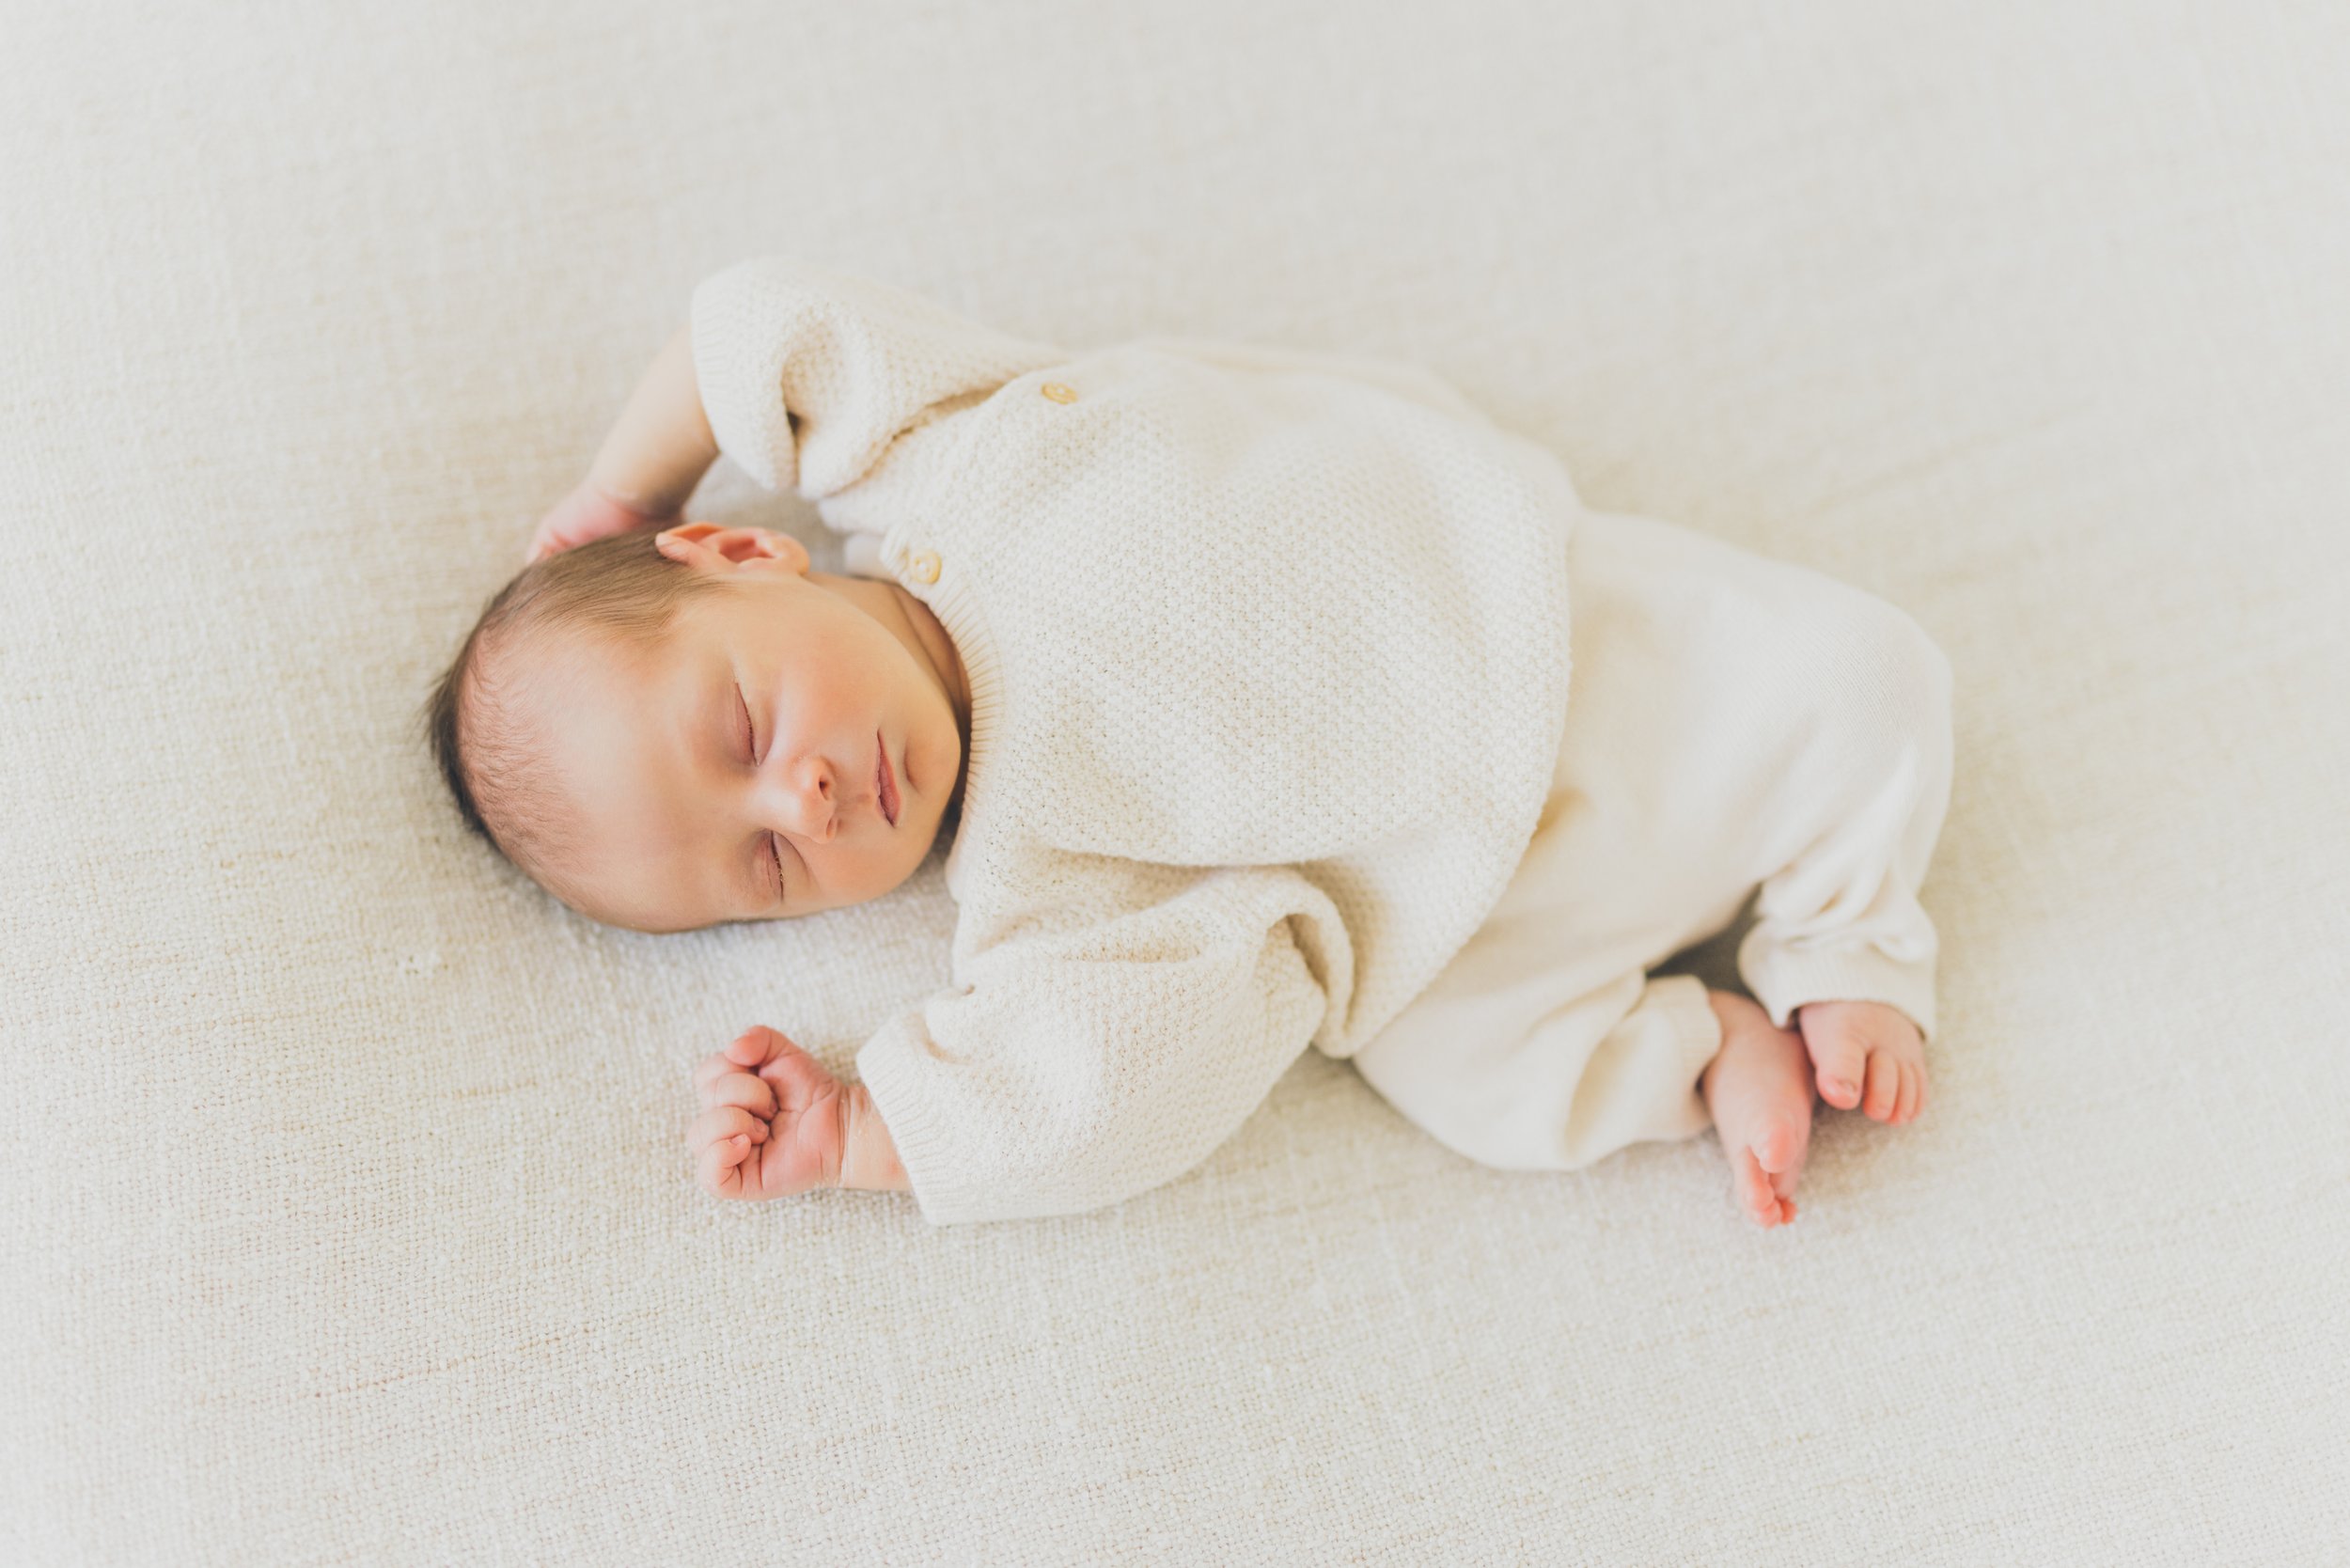  A newborn baby wearing cream coloured knitwear in RinkaDink Studio Belfast Northern Ireland. 